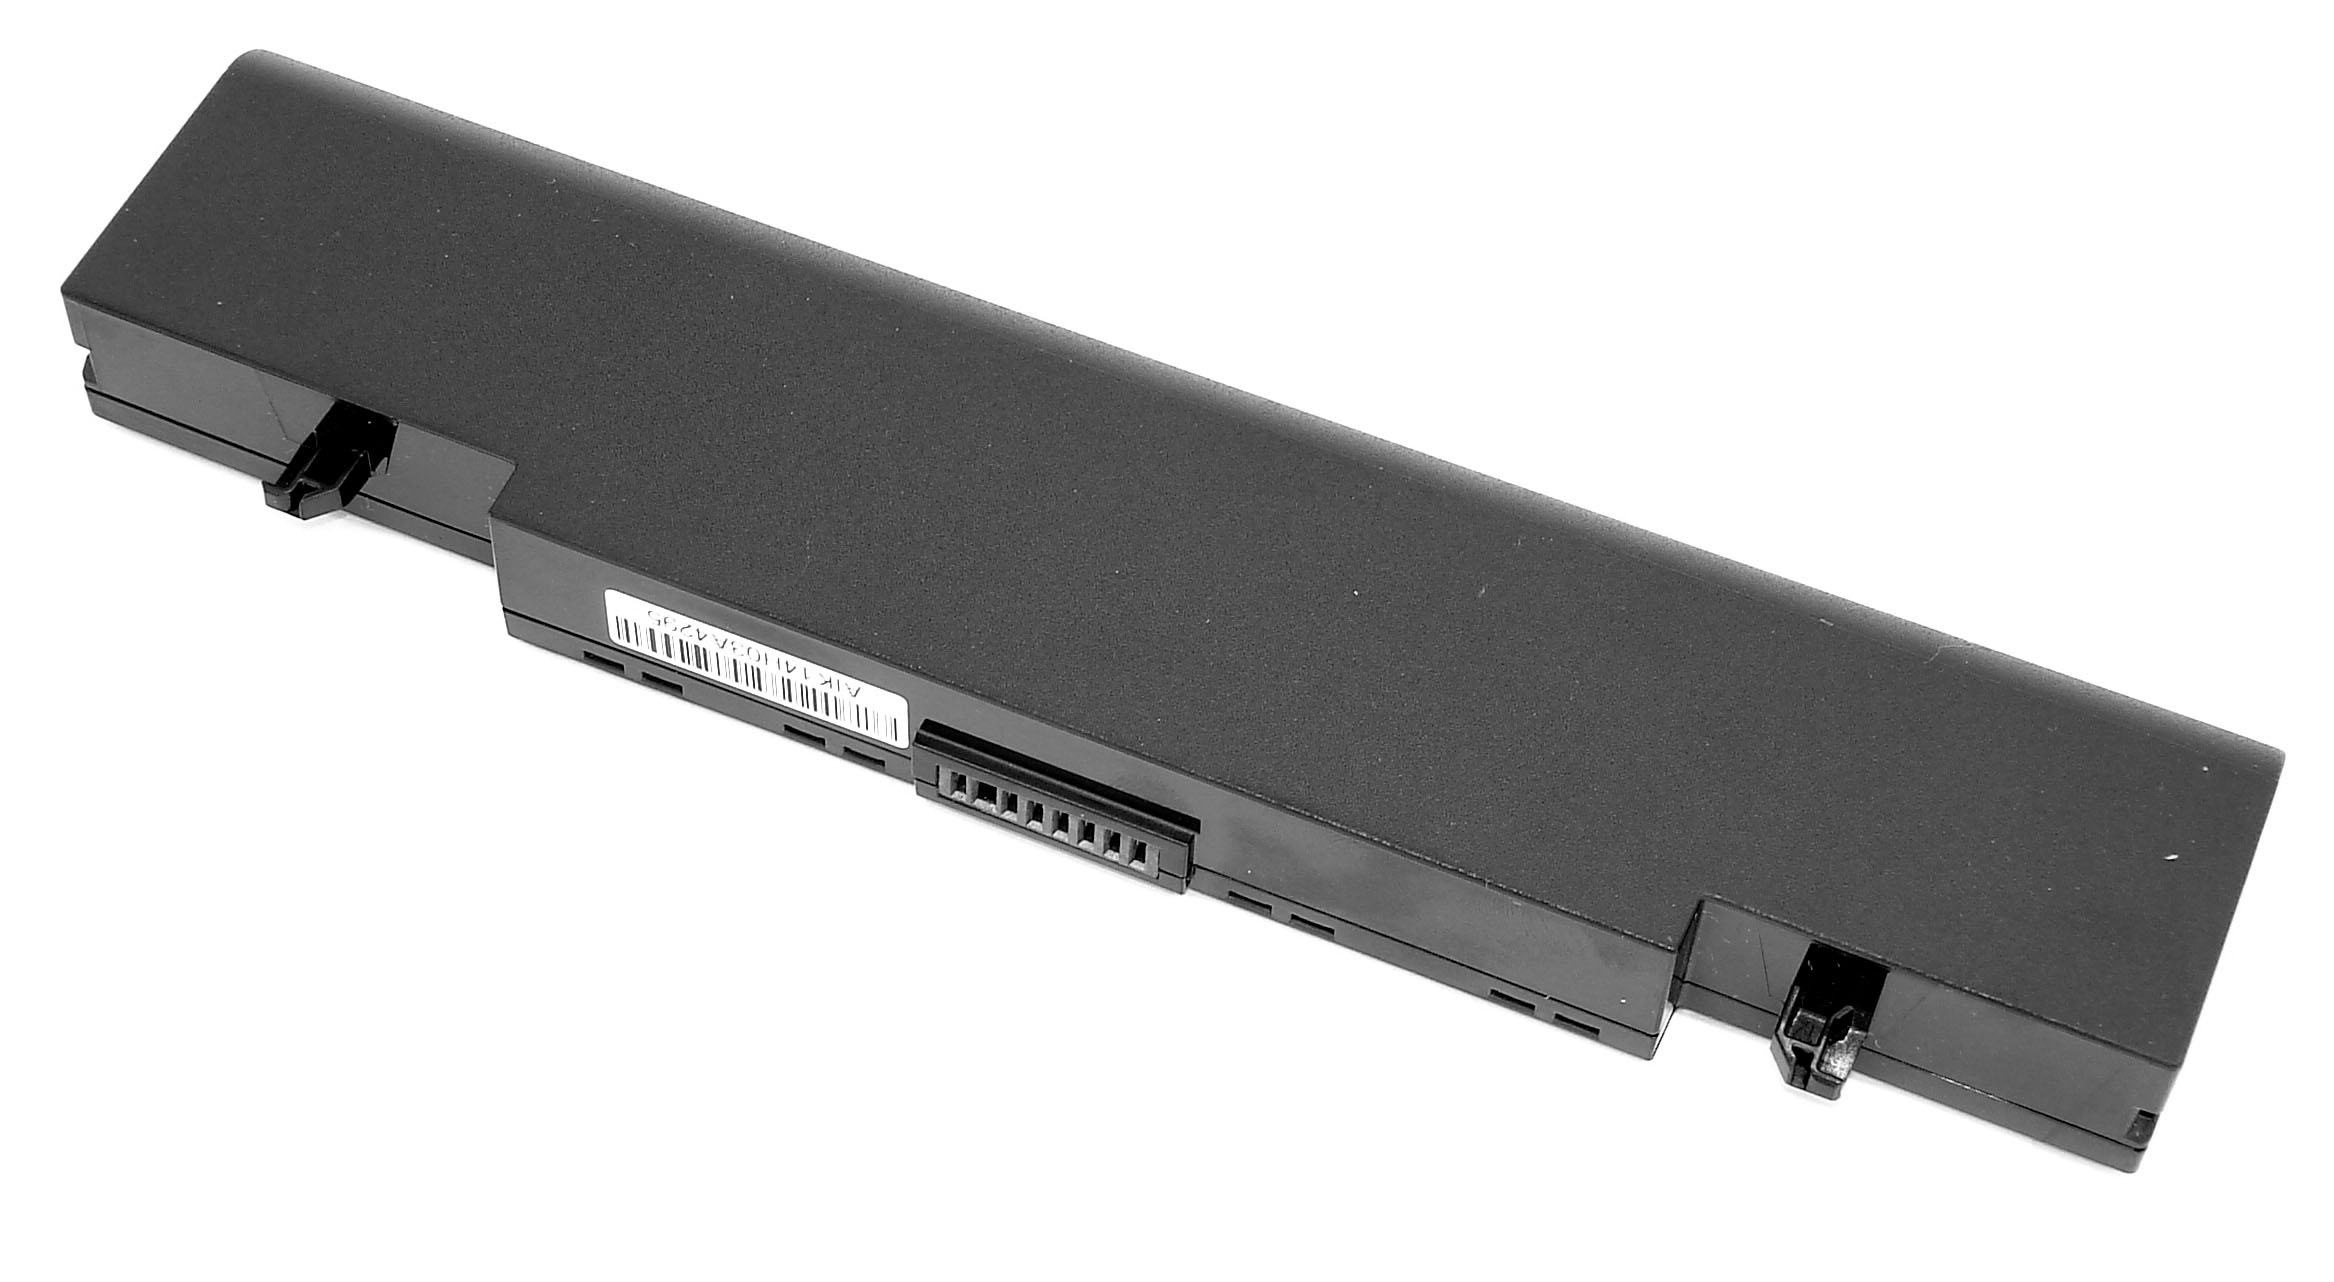 Купить аккумулятор для ноутбука SAMSUNG AA-PB9NS6B 48 Wh 11.1V